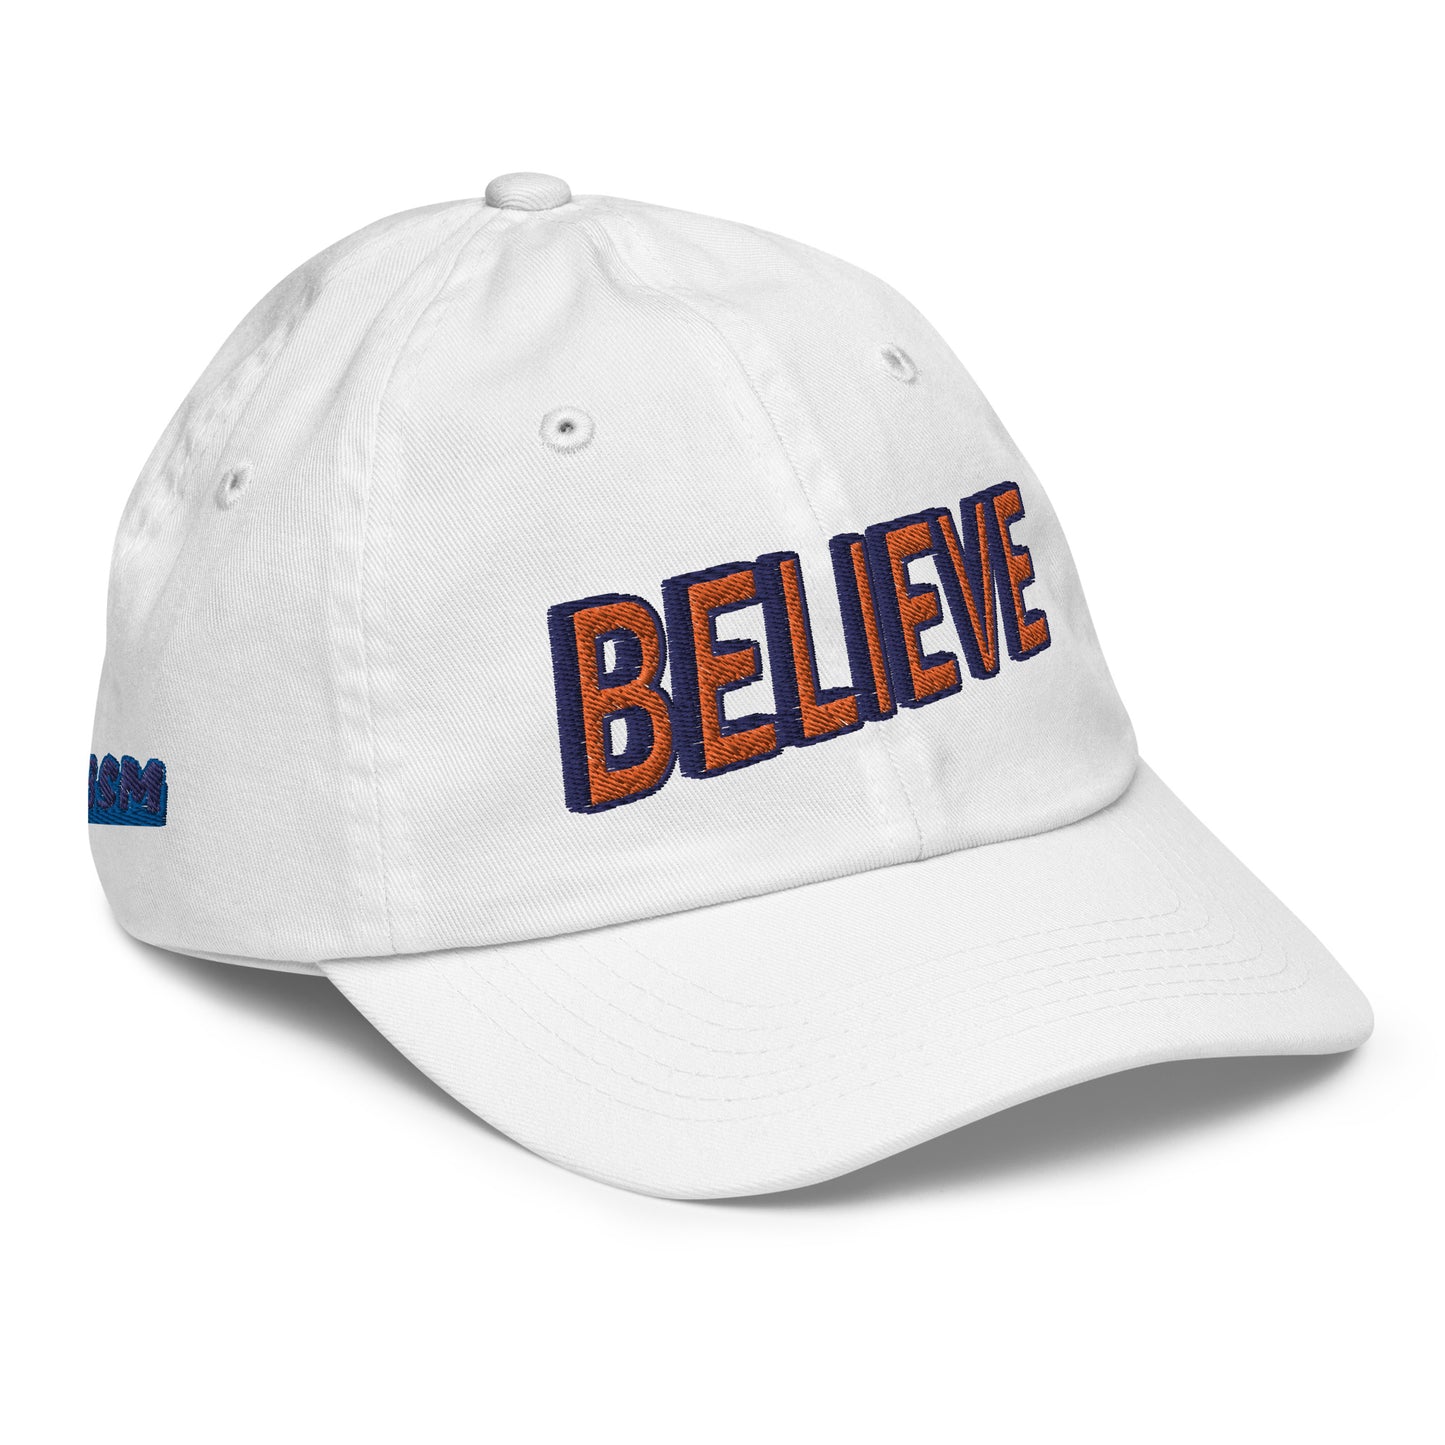 Believe Youth Baseball Cap